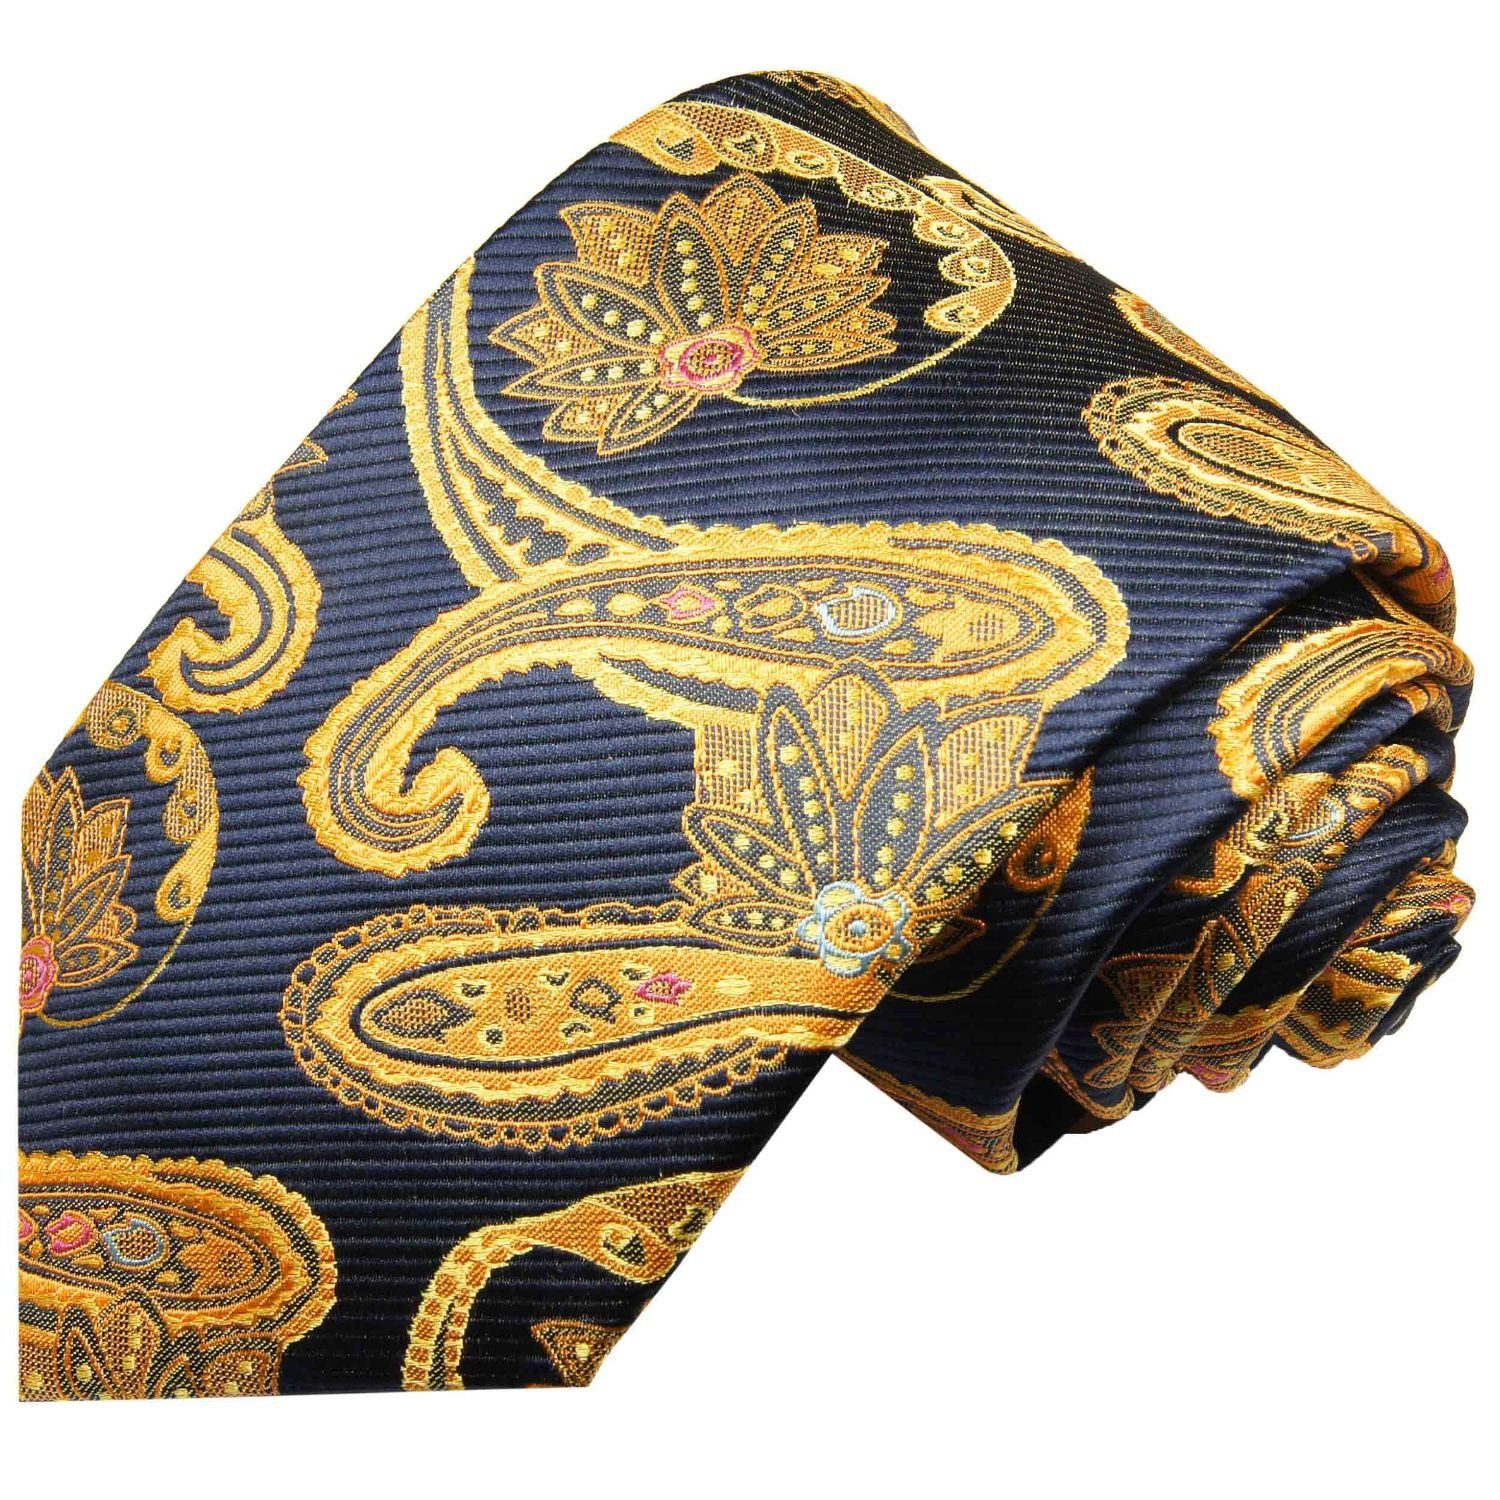 Paul Malone Krawatte Elegante Seidenkrawatte Herren Schlips paisley brokat 100% Seide Breit (8cm), blau gelb gold 2025 blau gold